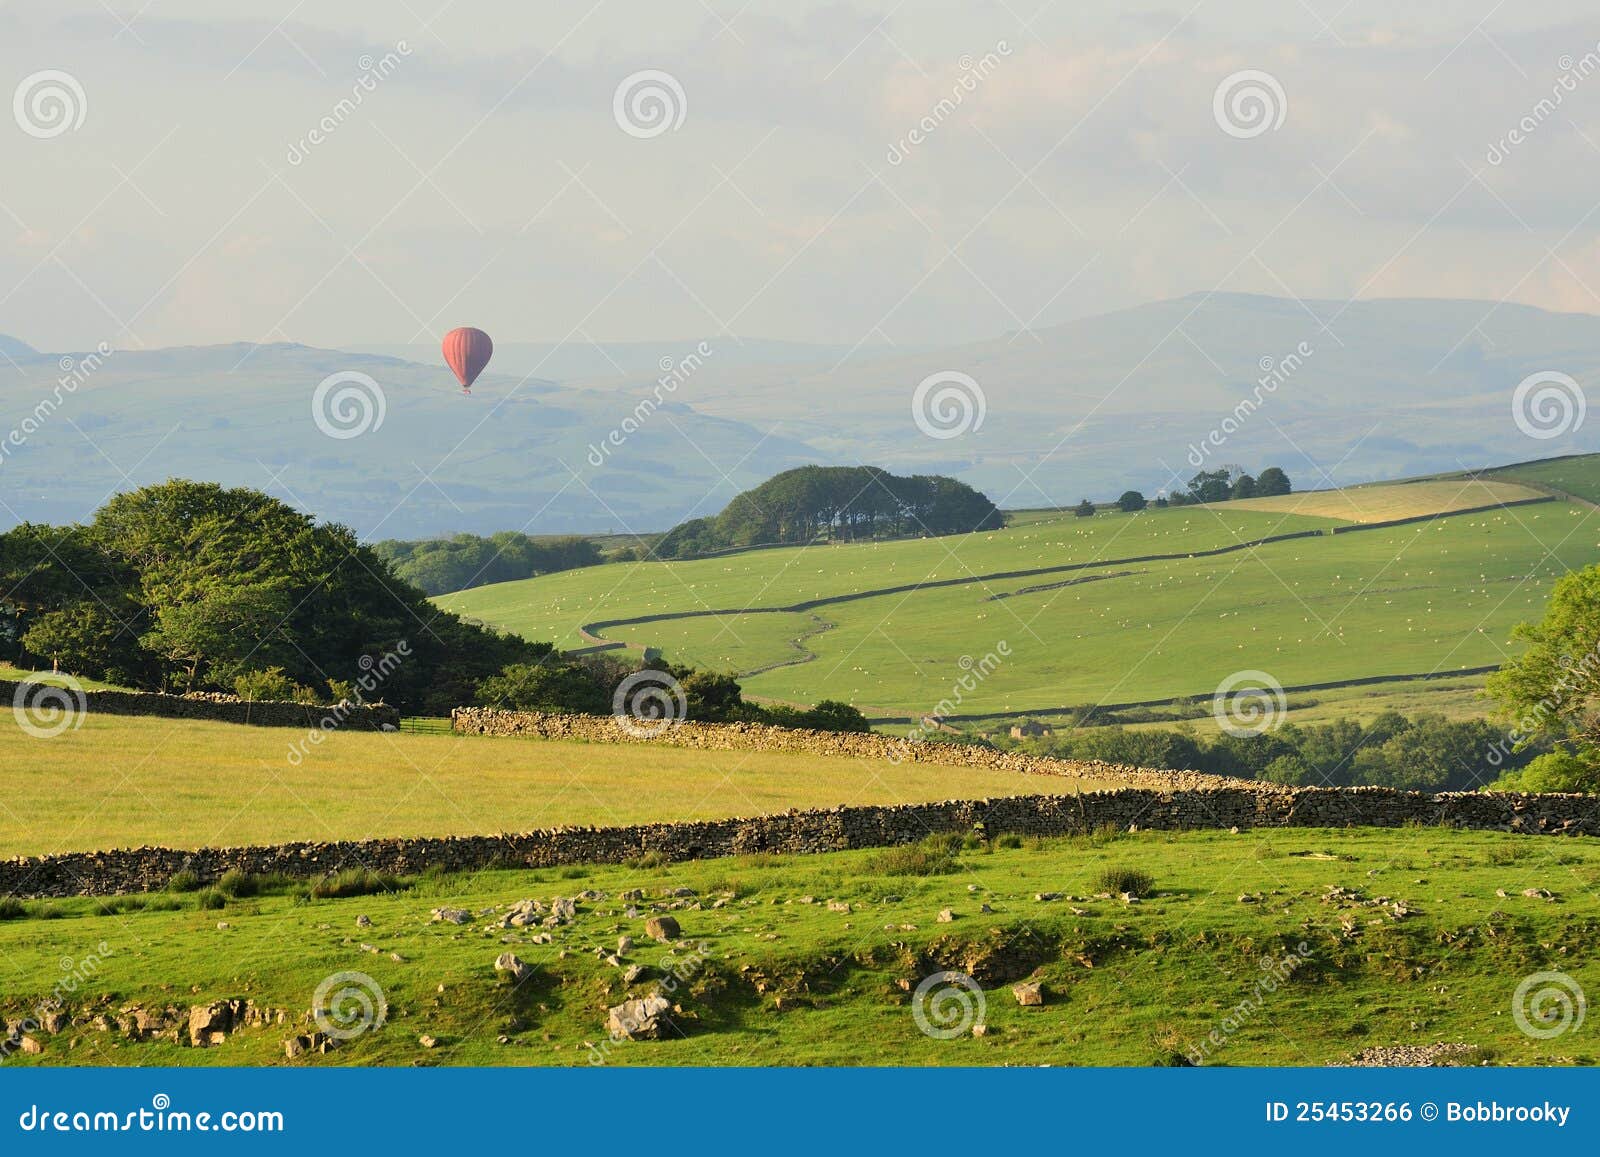 lancashire hills, hot air balloon